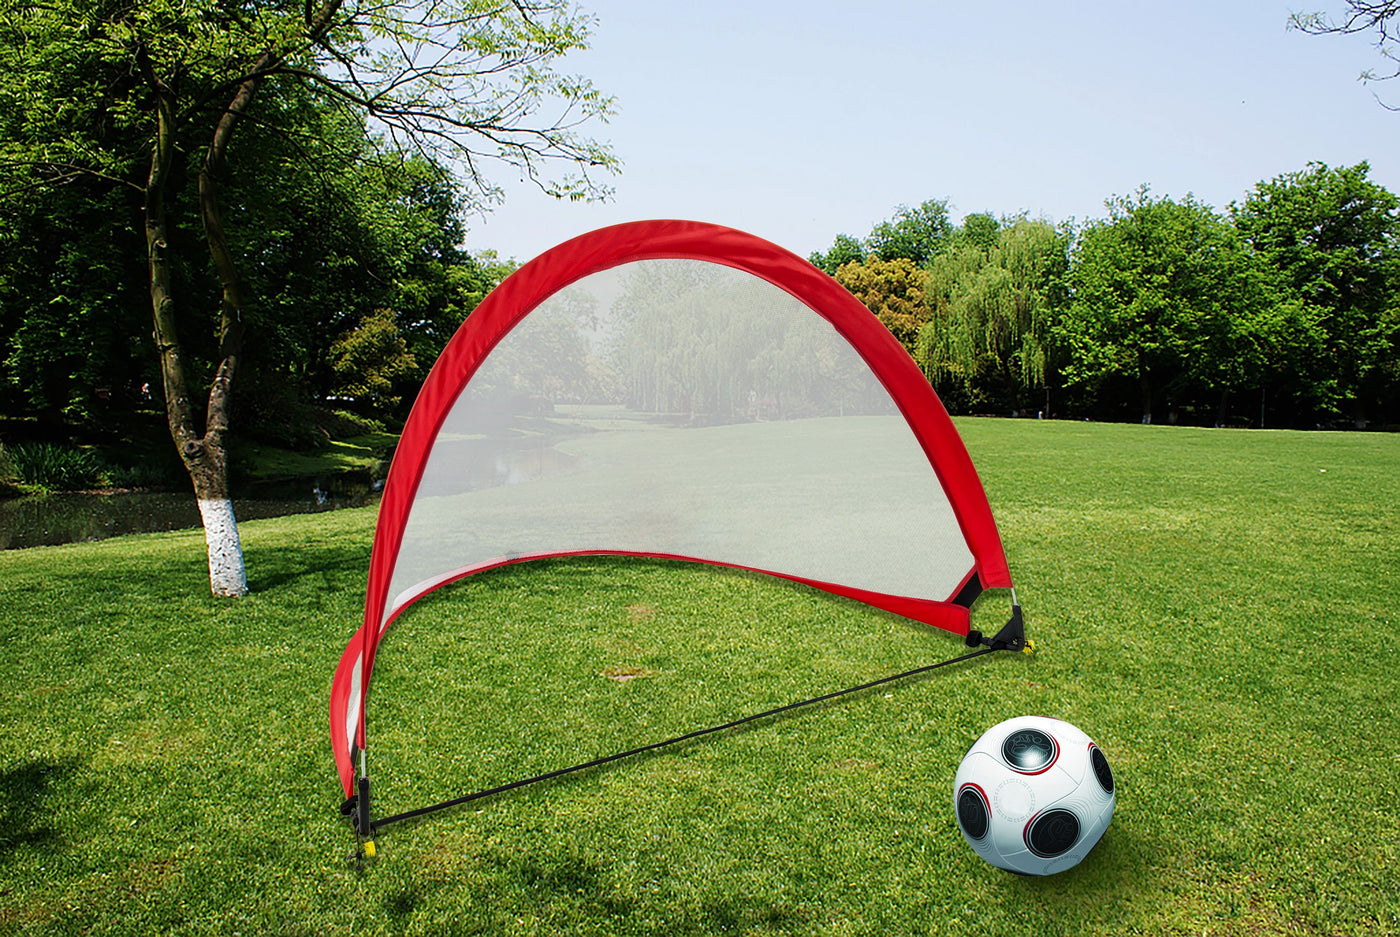 Portable Kids Soccer Goals Set &ndash; 2 Pop Up Soccer Goals, Cones, Goal Carry Bag